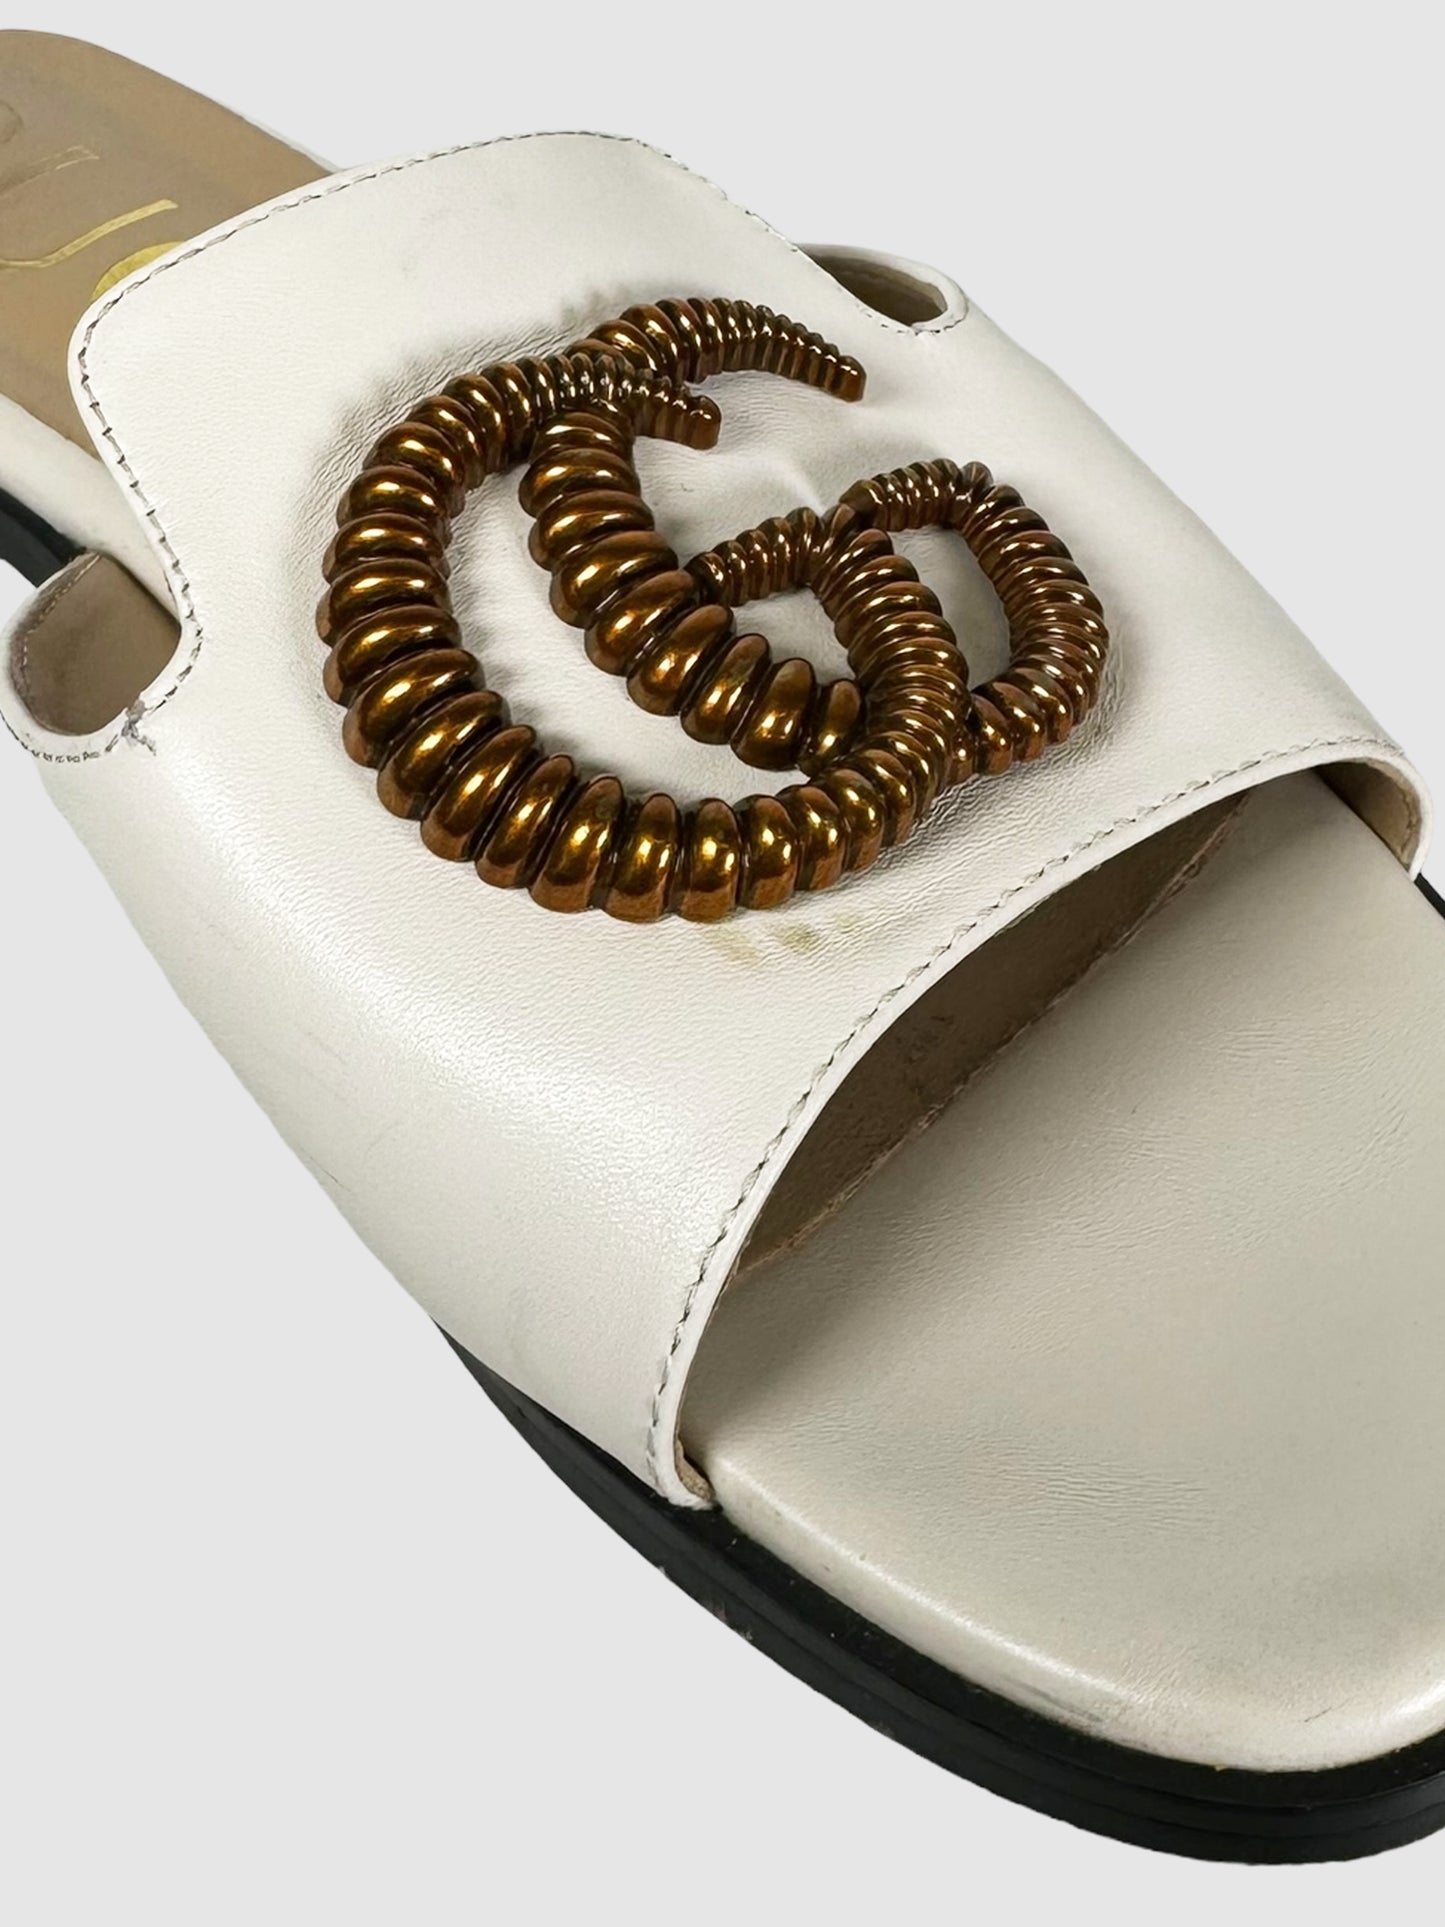 Gucci GG Slip Sandals - Size 38